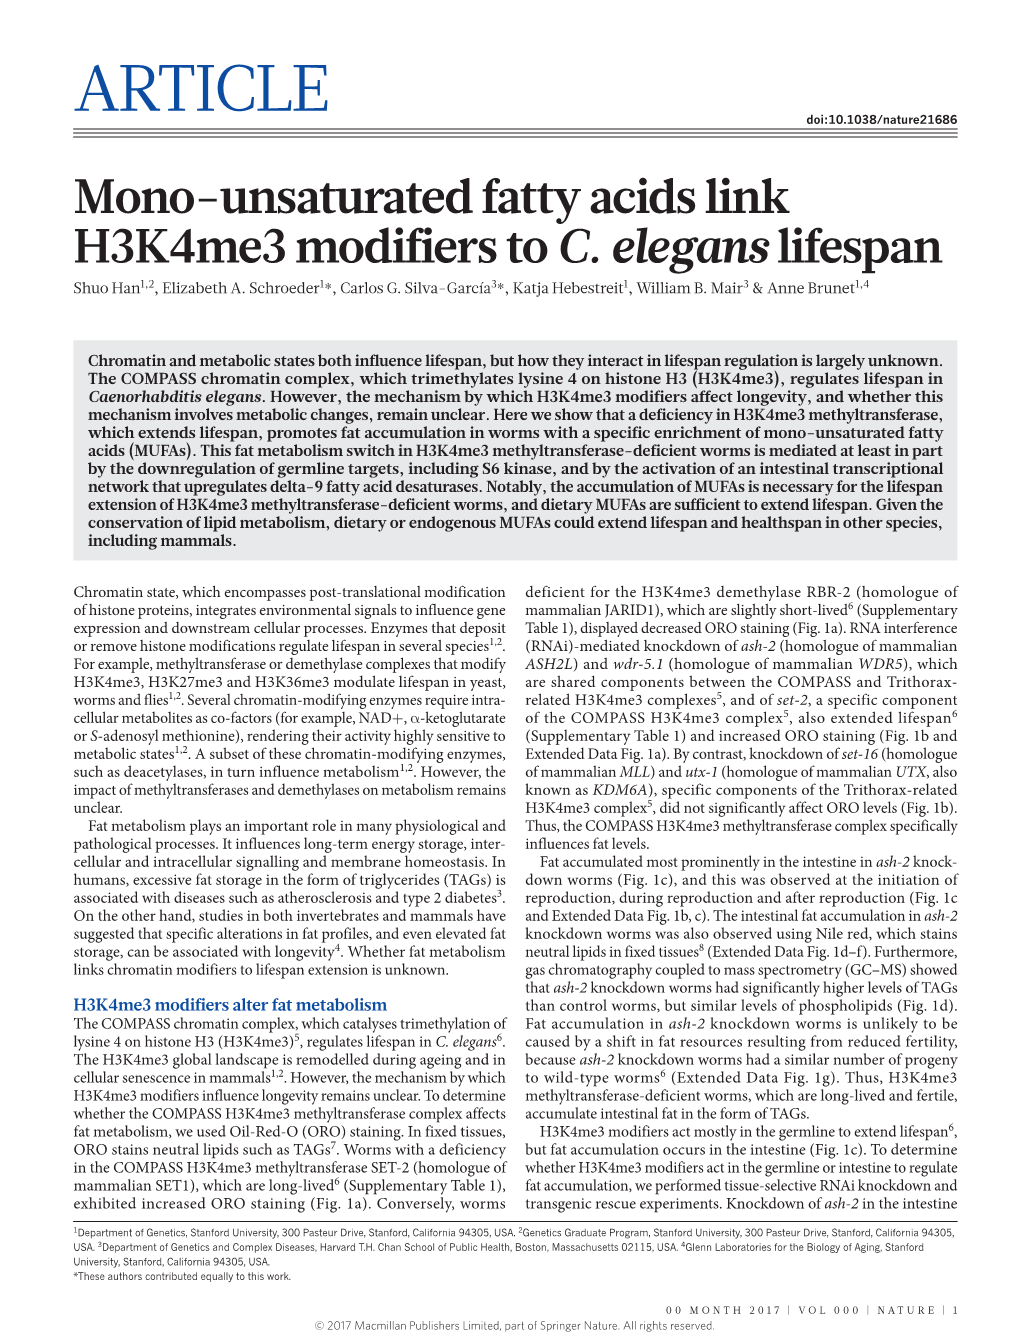 Mono-Unsaturated Fatty Acids Link H3k4me3 Modifiers to C. Elegans Lifespan Shuo Han1,2, Elizabeth A